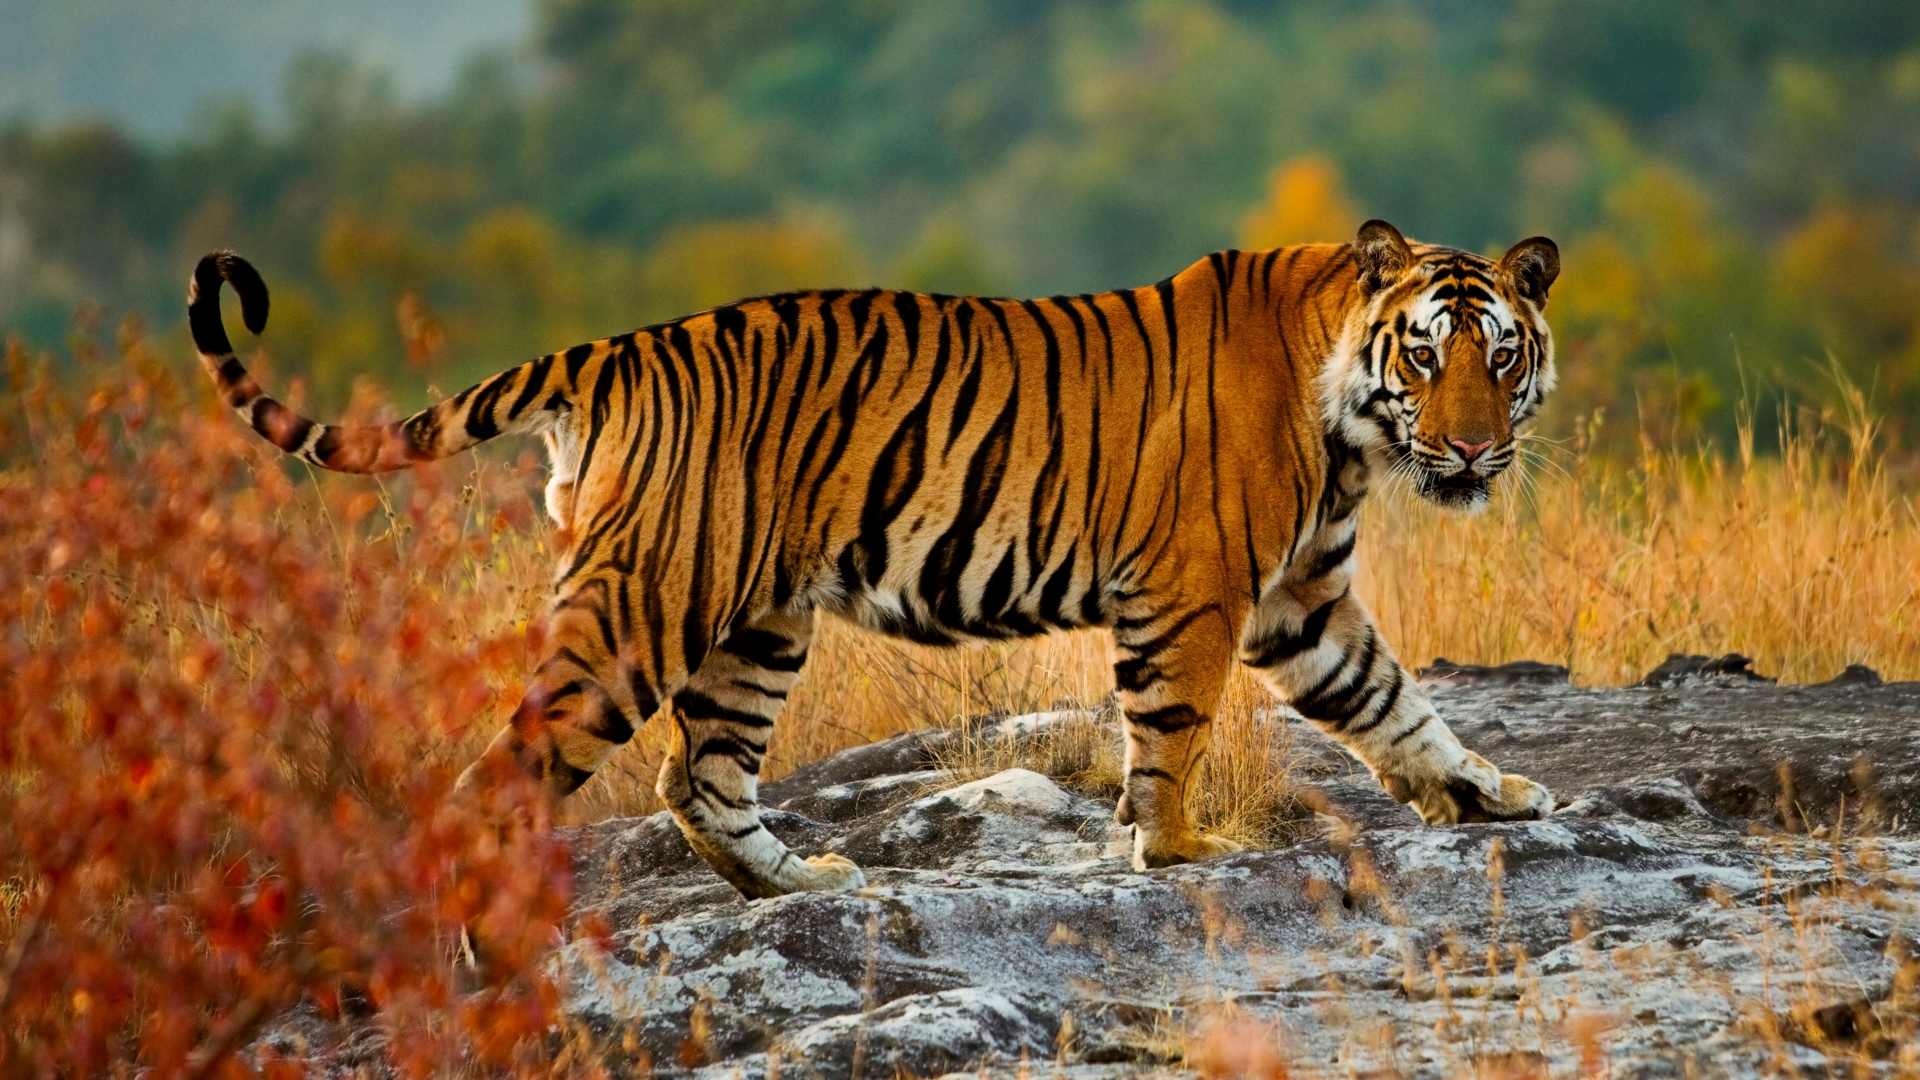 A tiger walking in India's Bandhavgarh National Park.